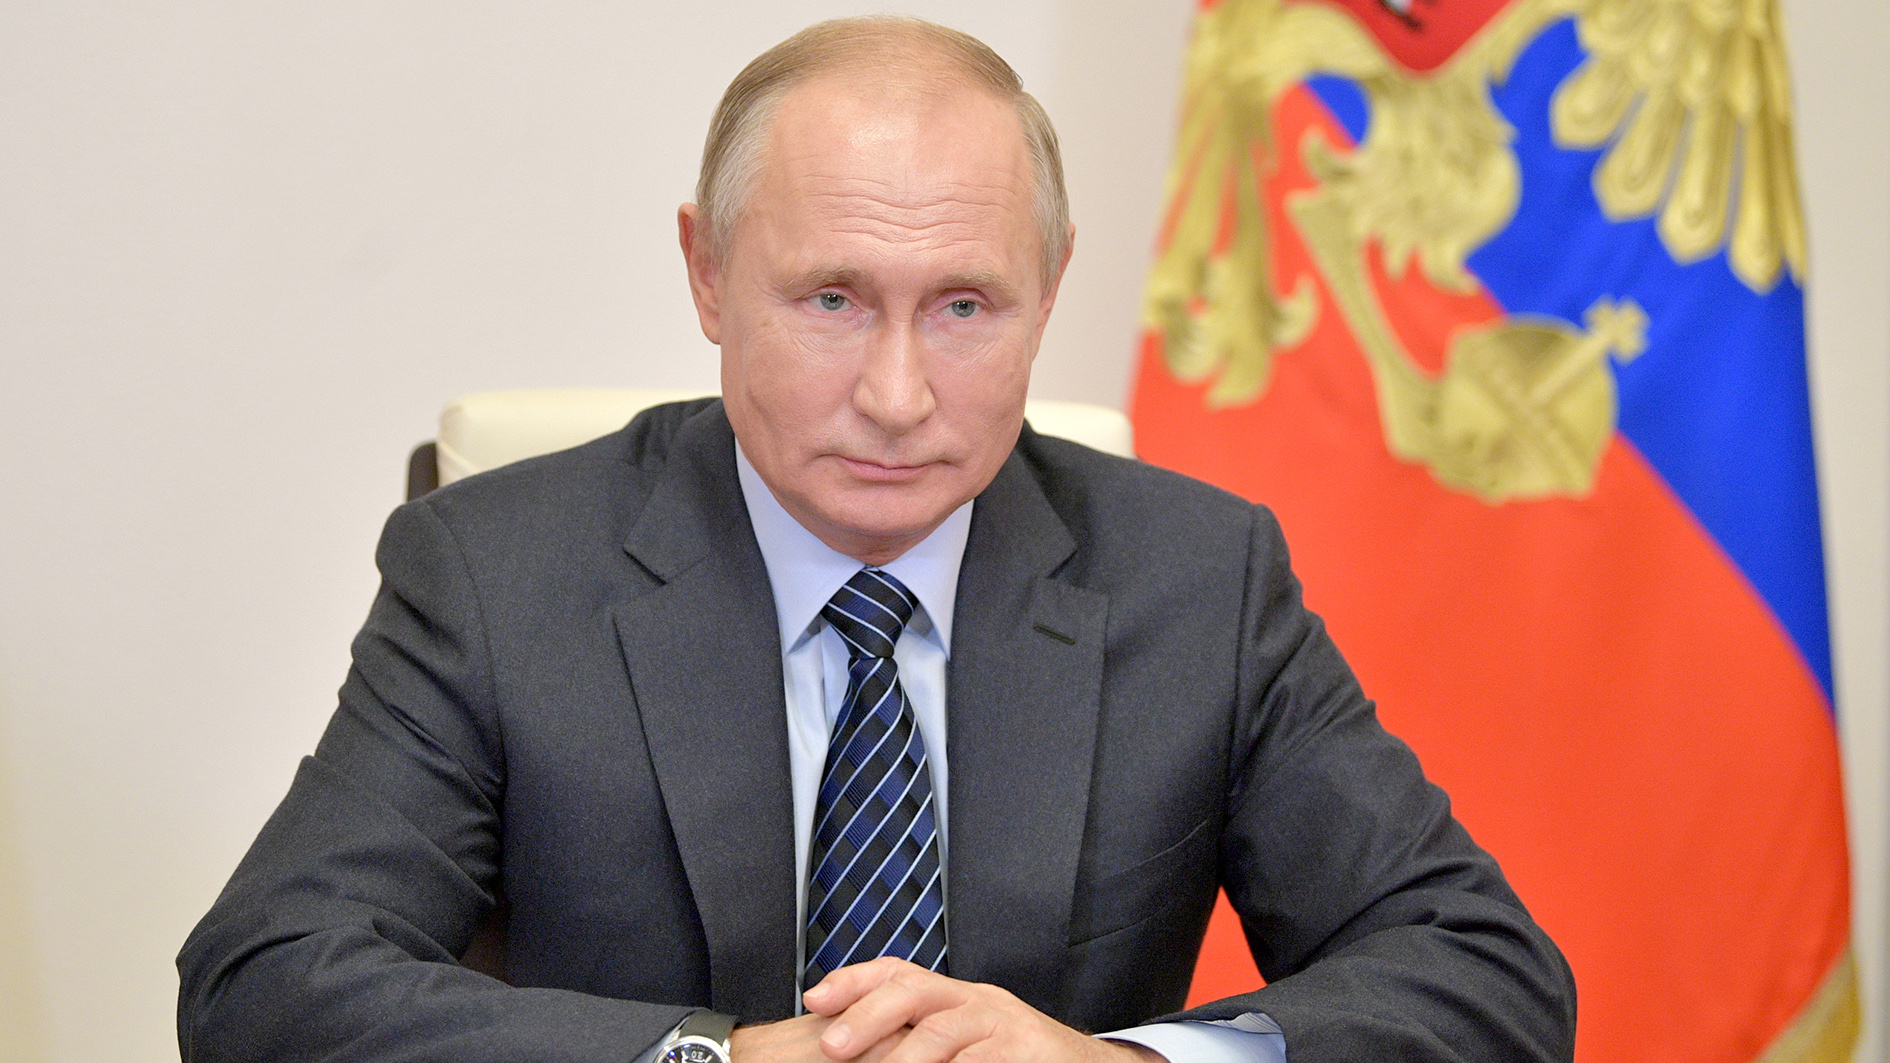 russian-president-putin-yet-to-congratulate-biden-cgtn